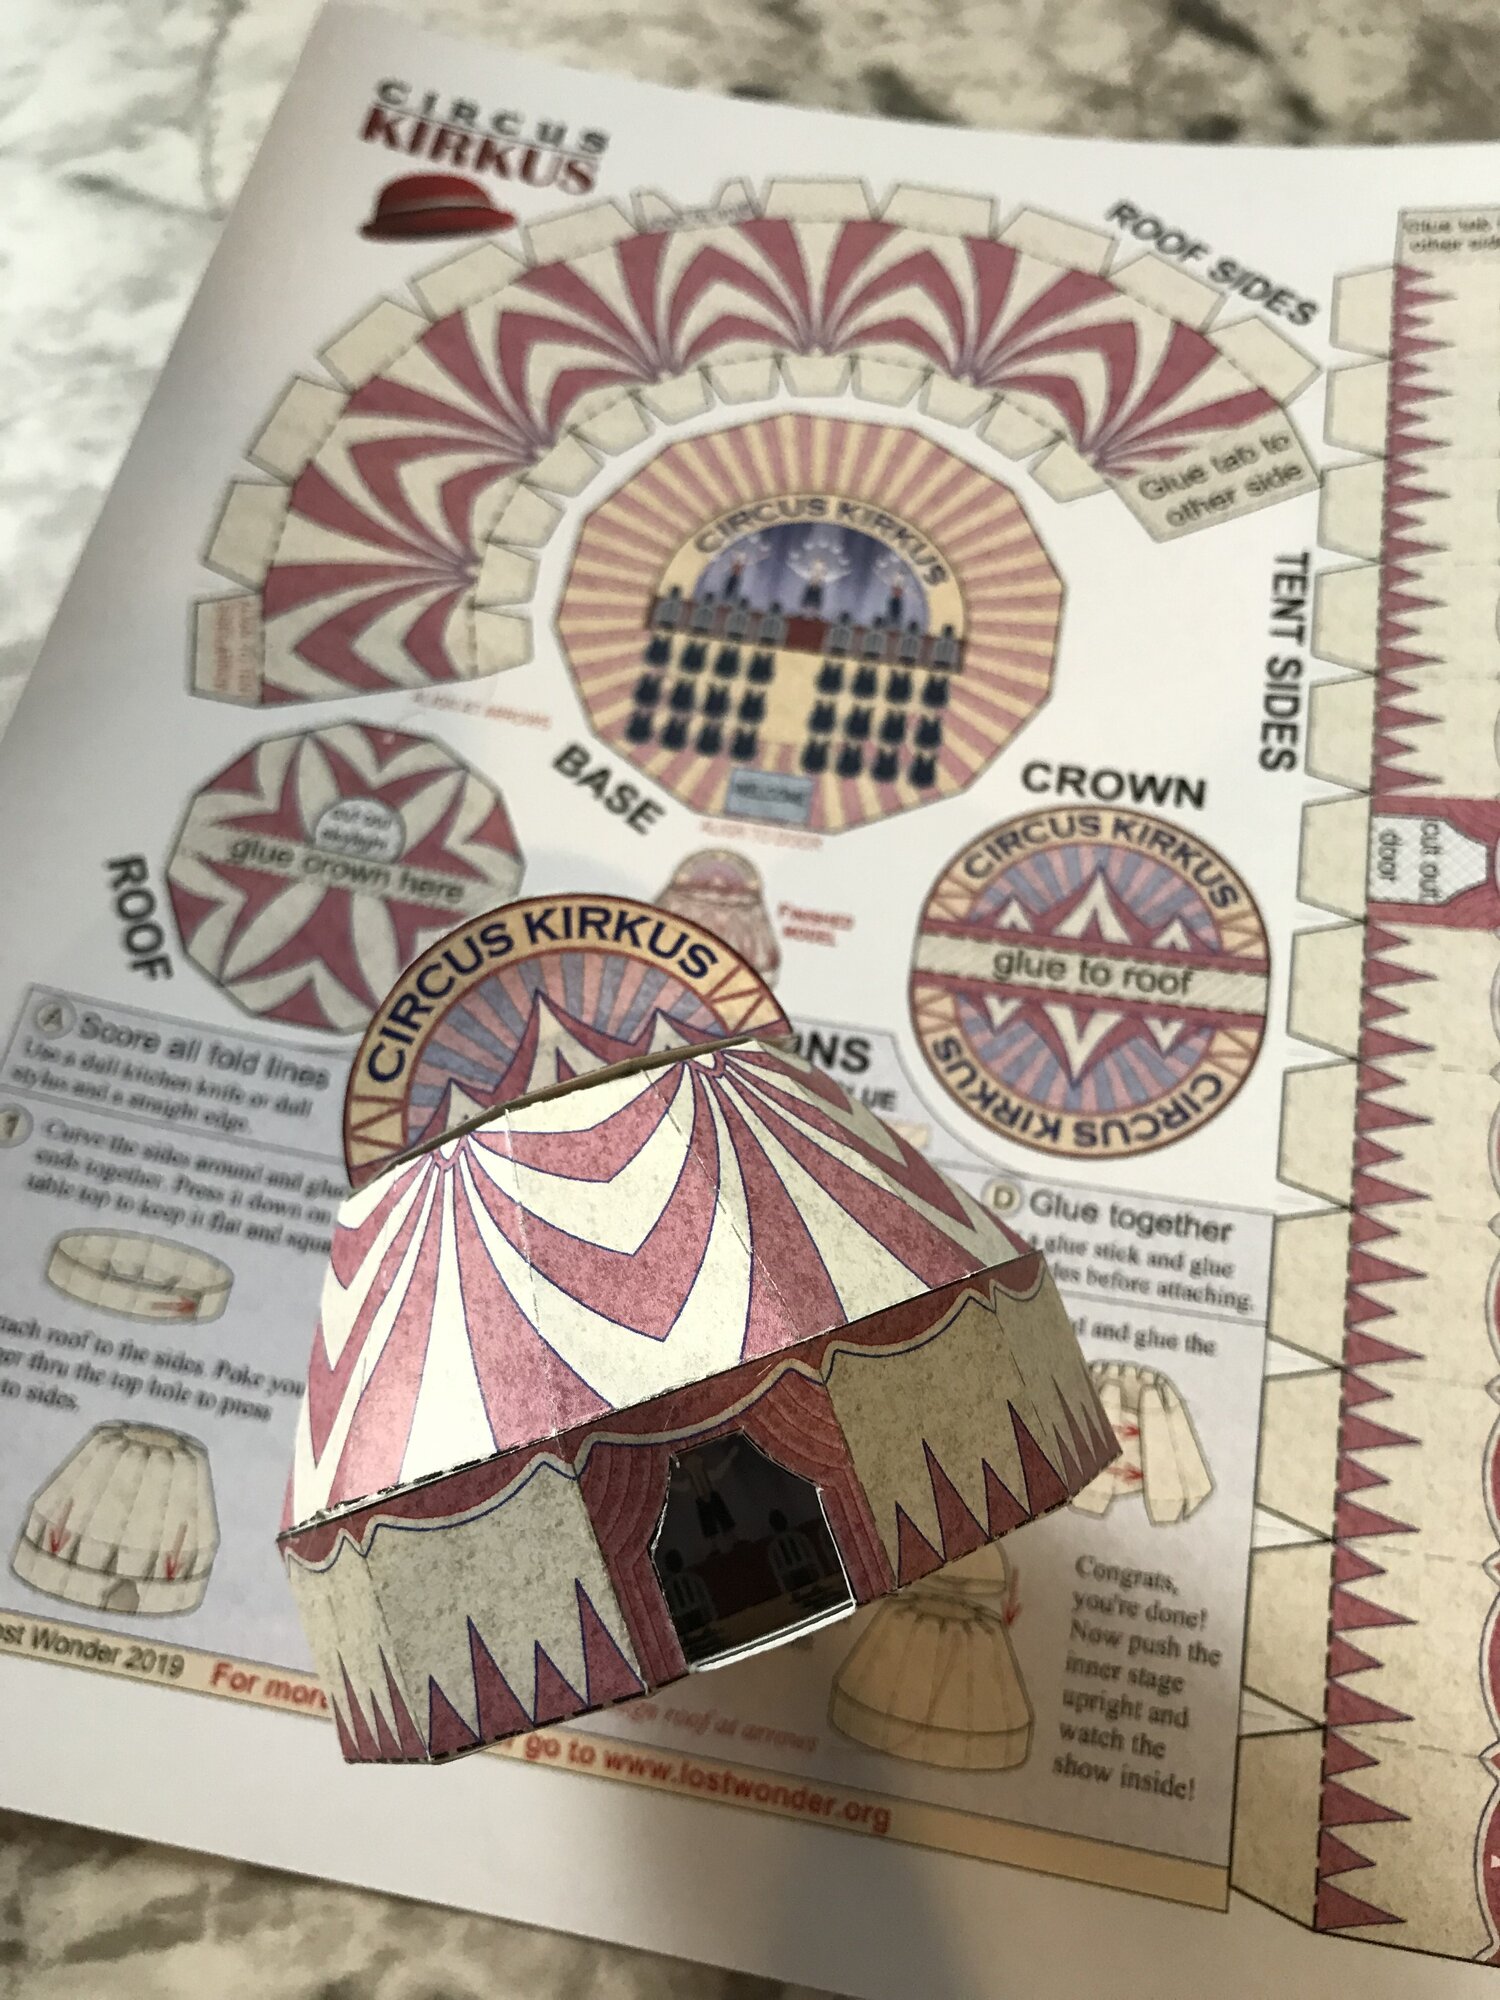 Small Paper Tent: Make-Your-Own Circus Kirkus tent! — Circus Kirkus